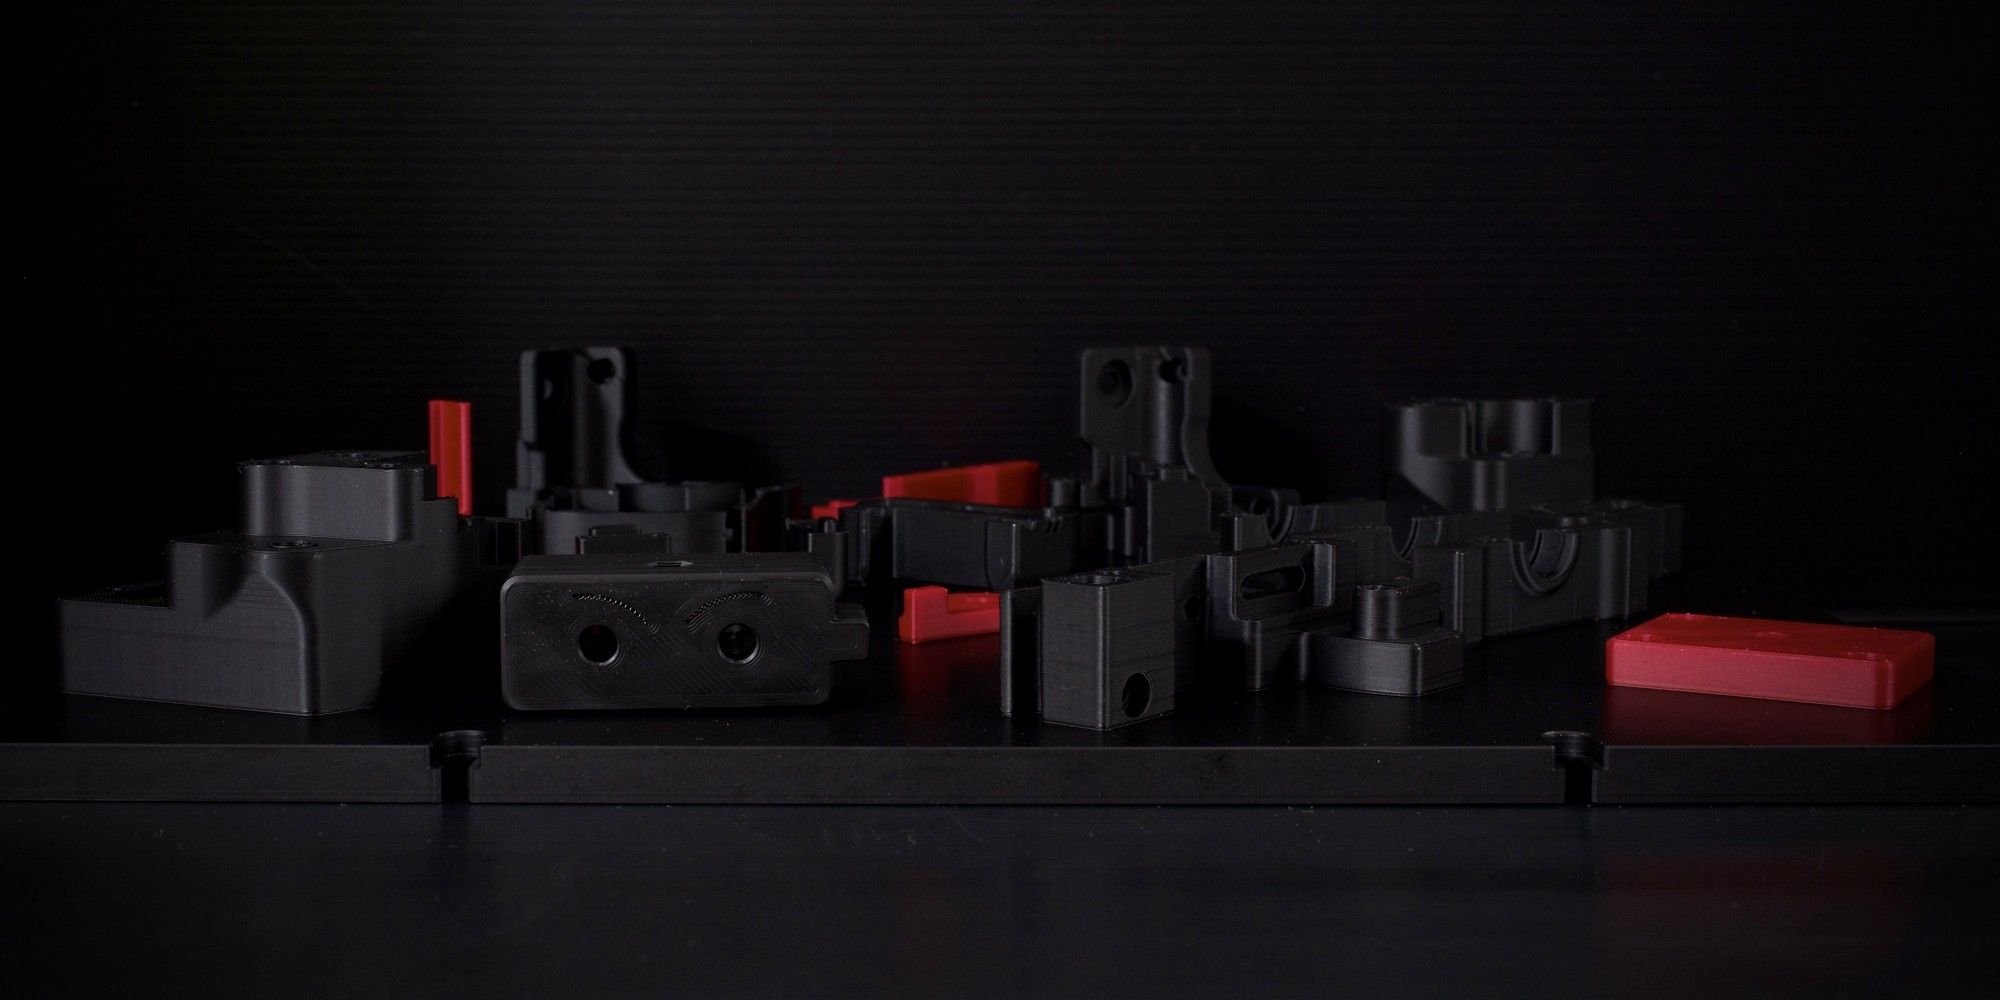 voron 3d printed parts - Una guida per principianti alle stampanti 3D Voron fai da te: qualità di produzione per le masse